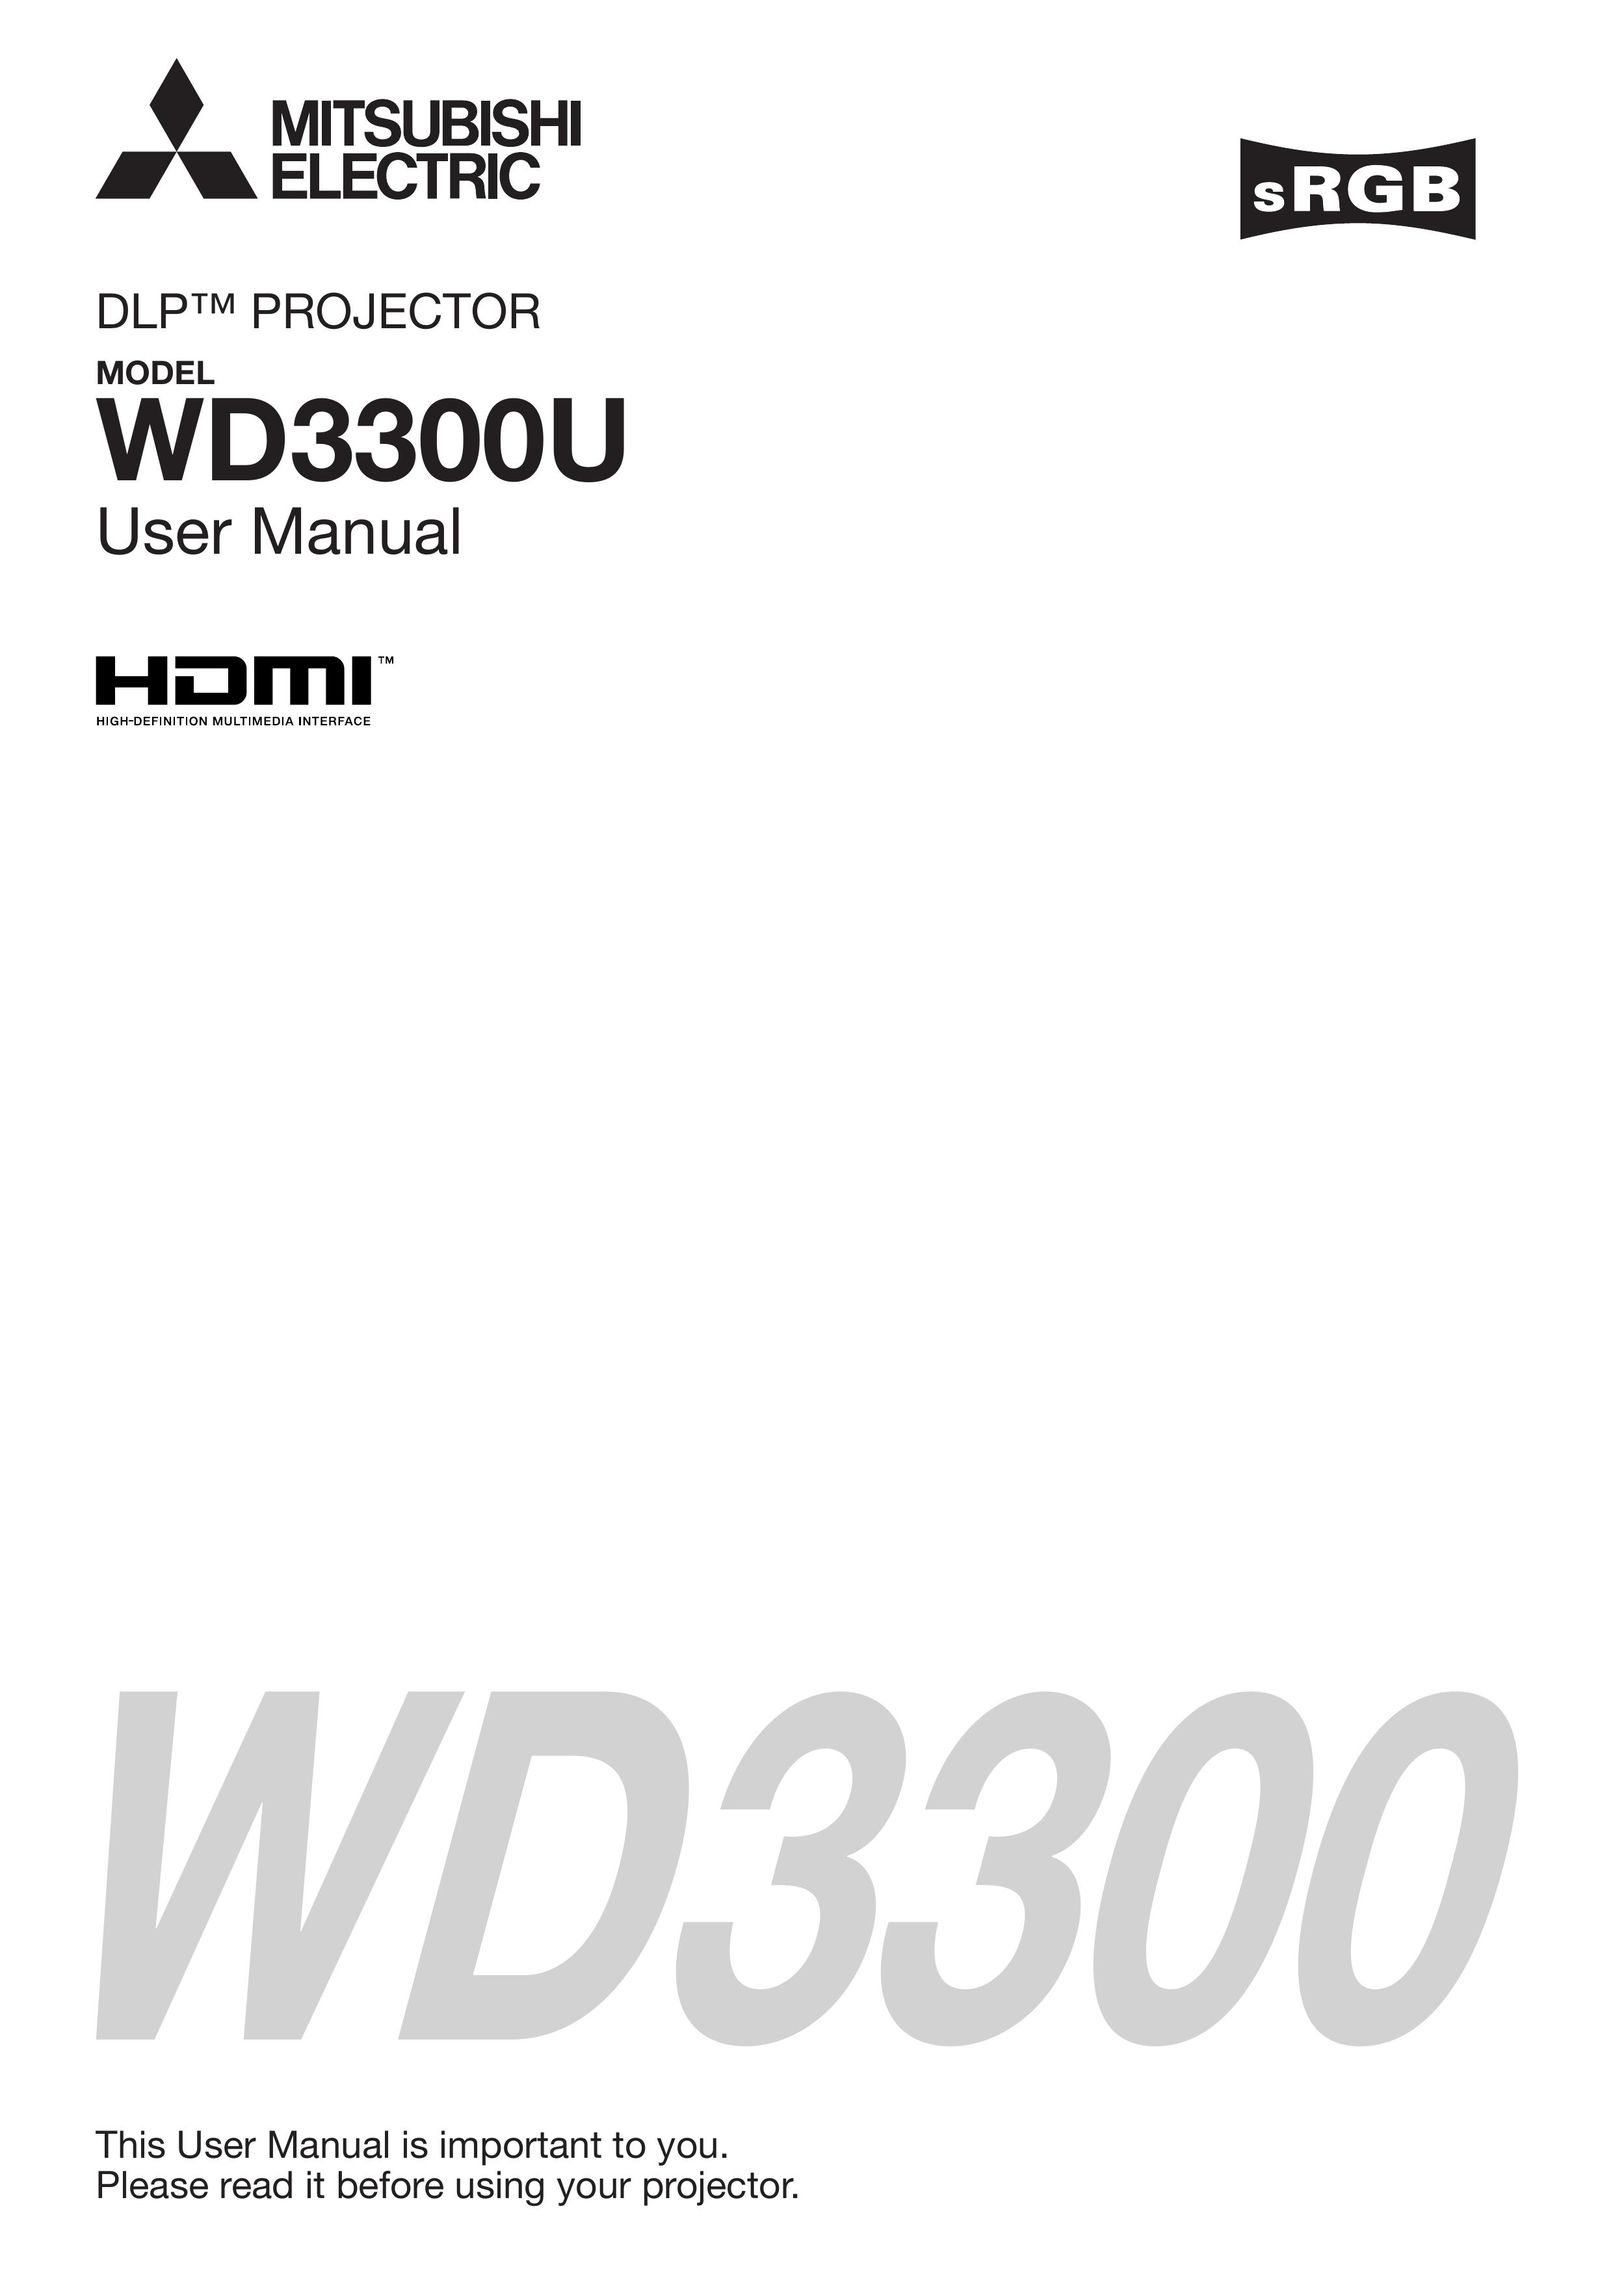 Mitsumi electronic WD3300U Projector User Manual